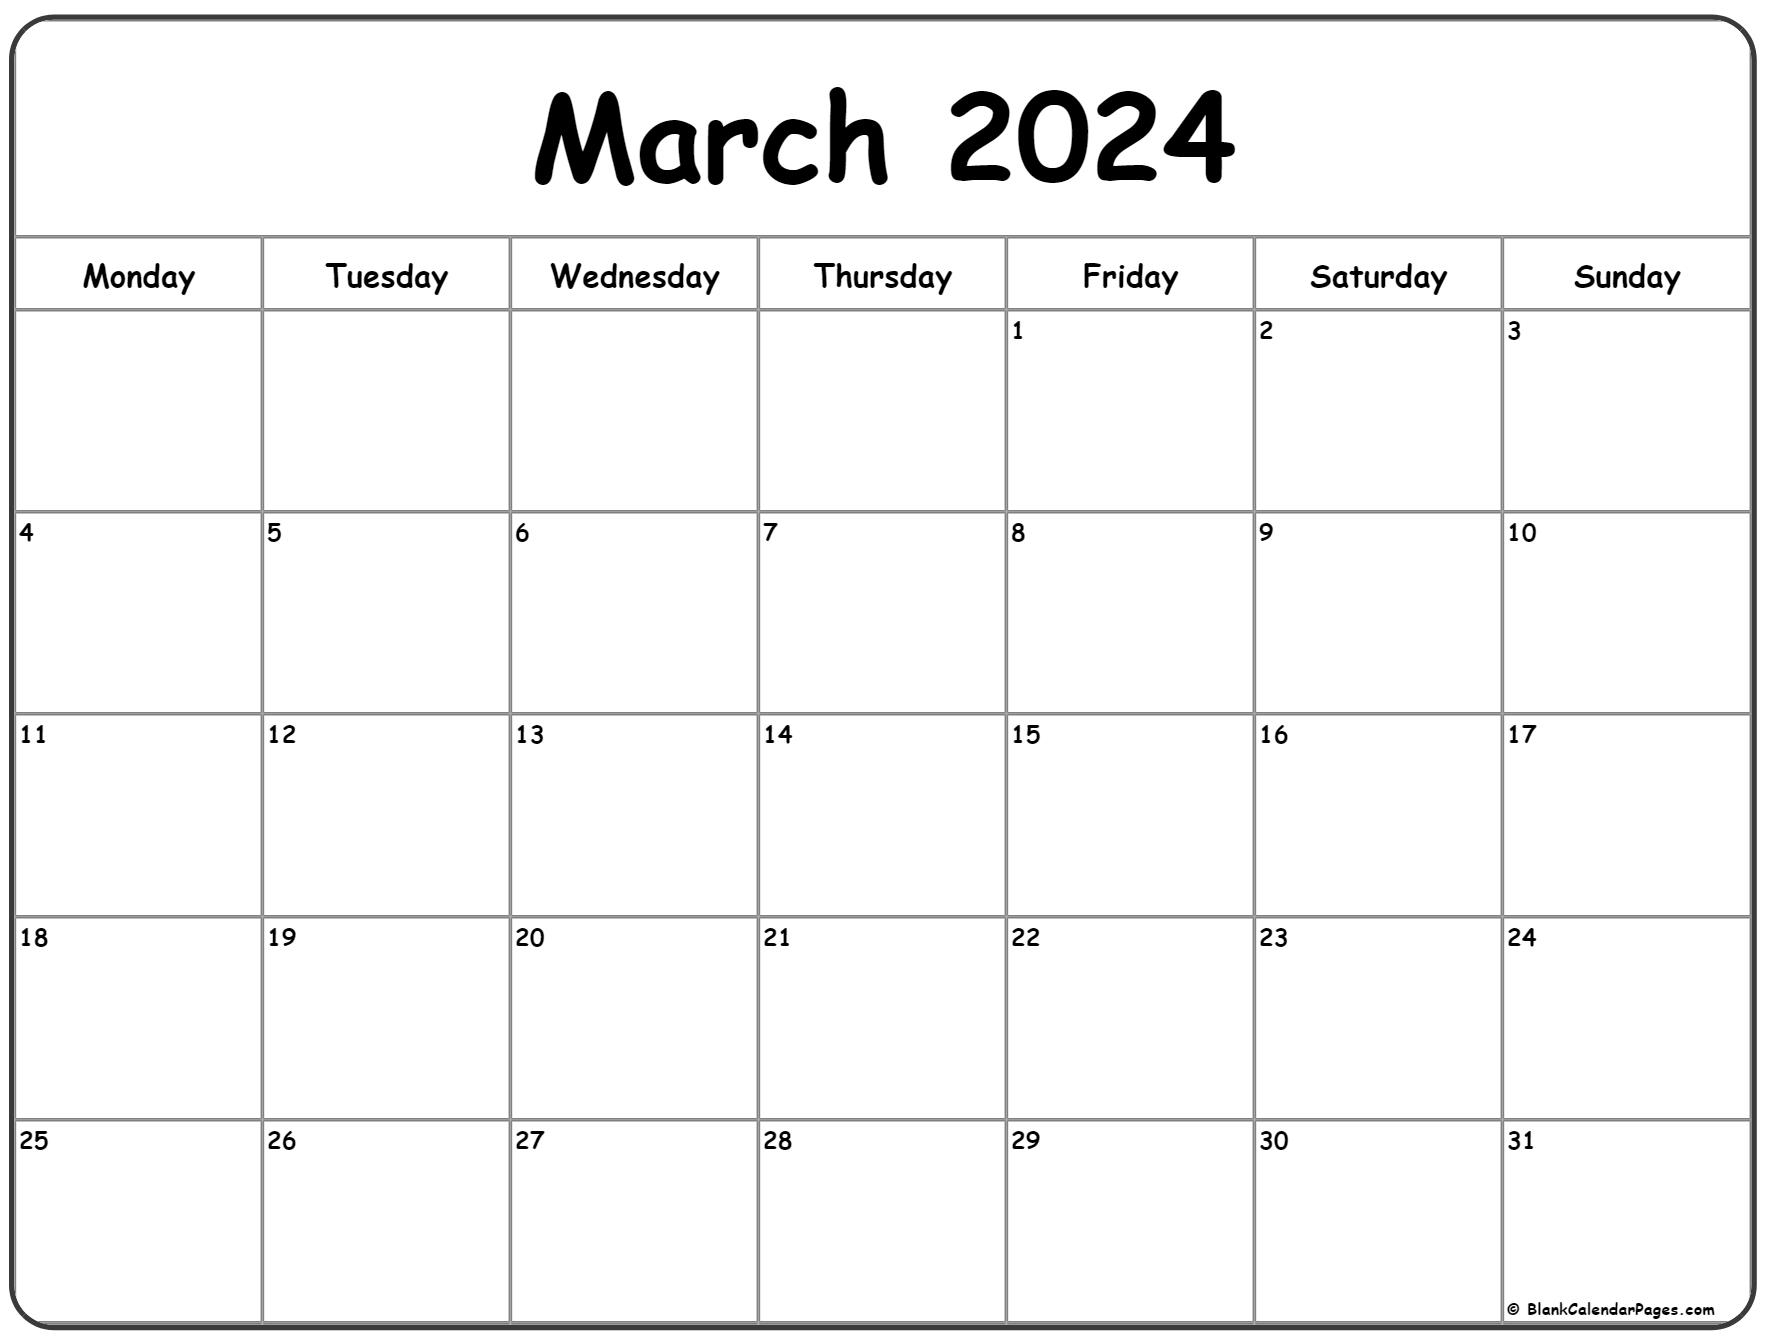 March 2024 Monday Calendar | Monday To Sunday for March 2024 Blank Printable Calendar